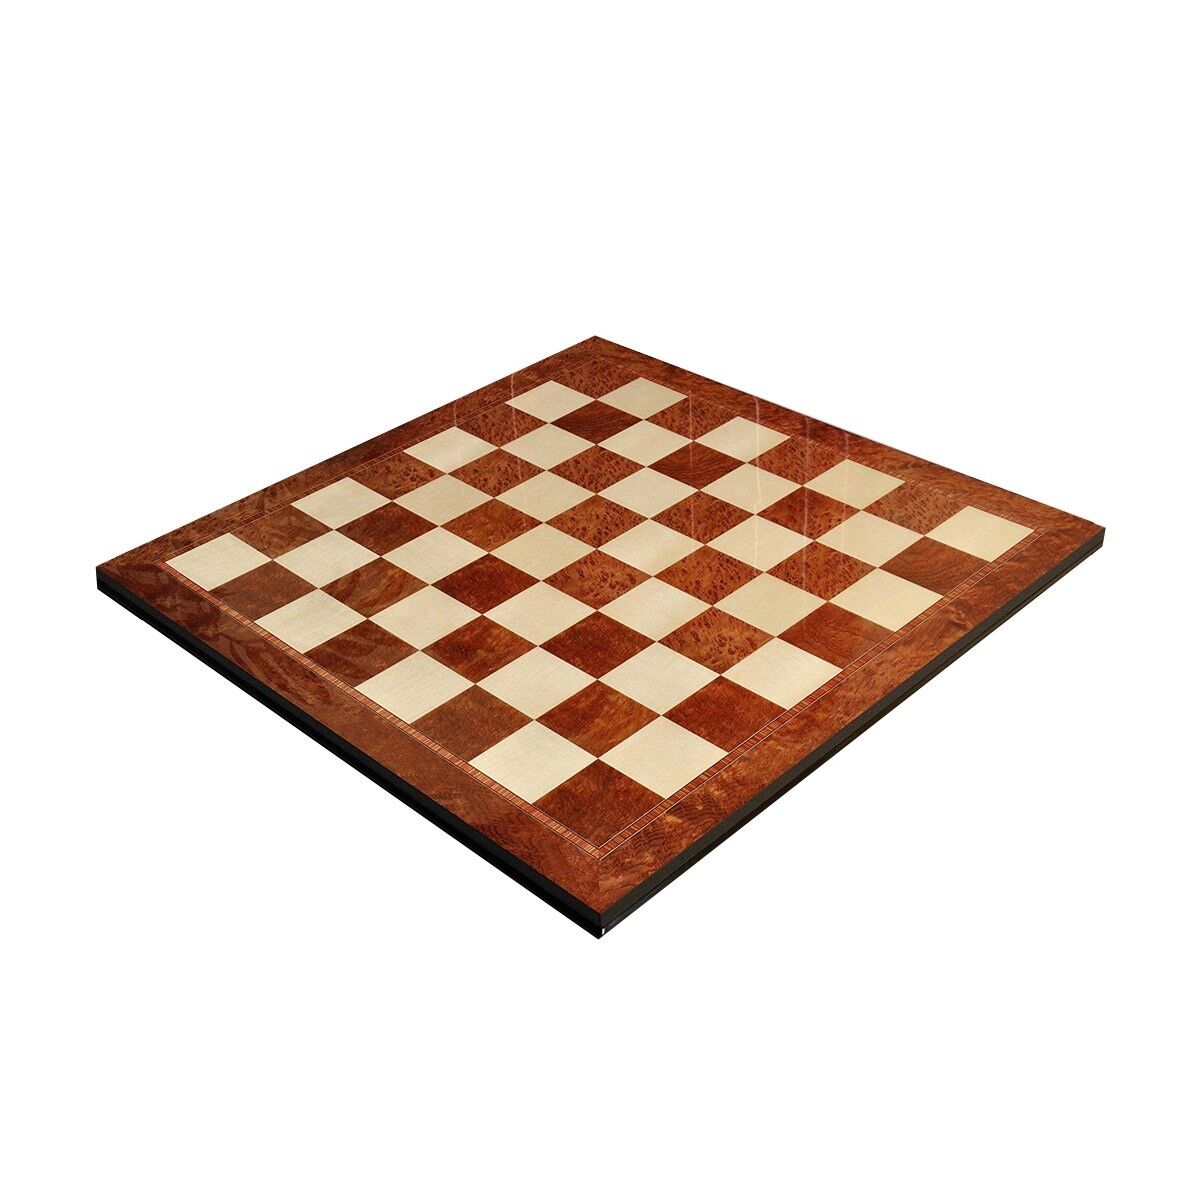 Vavona Burl & Maple Superior Traditional Chess Board - 2.5" Squares